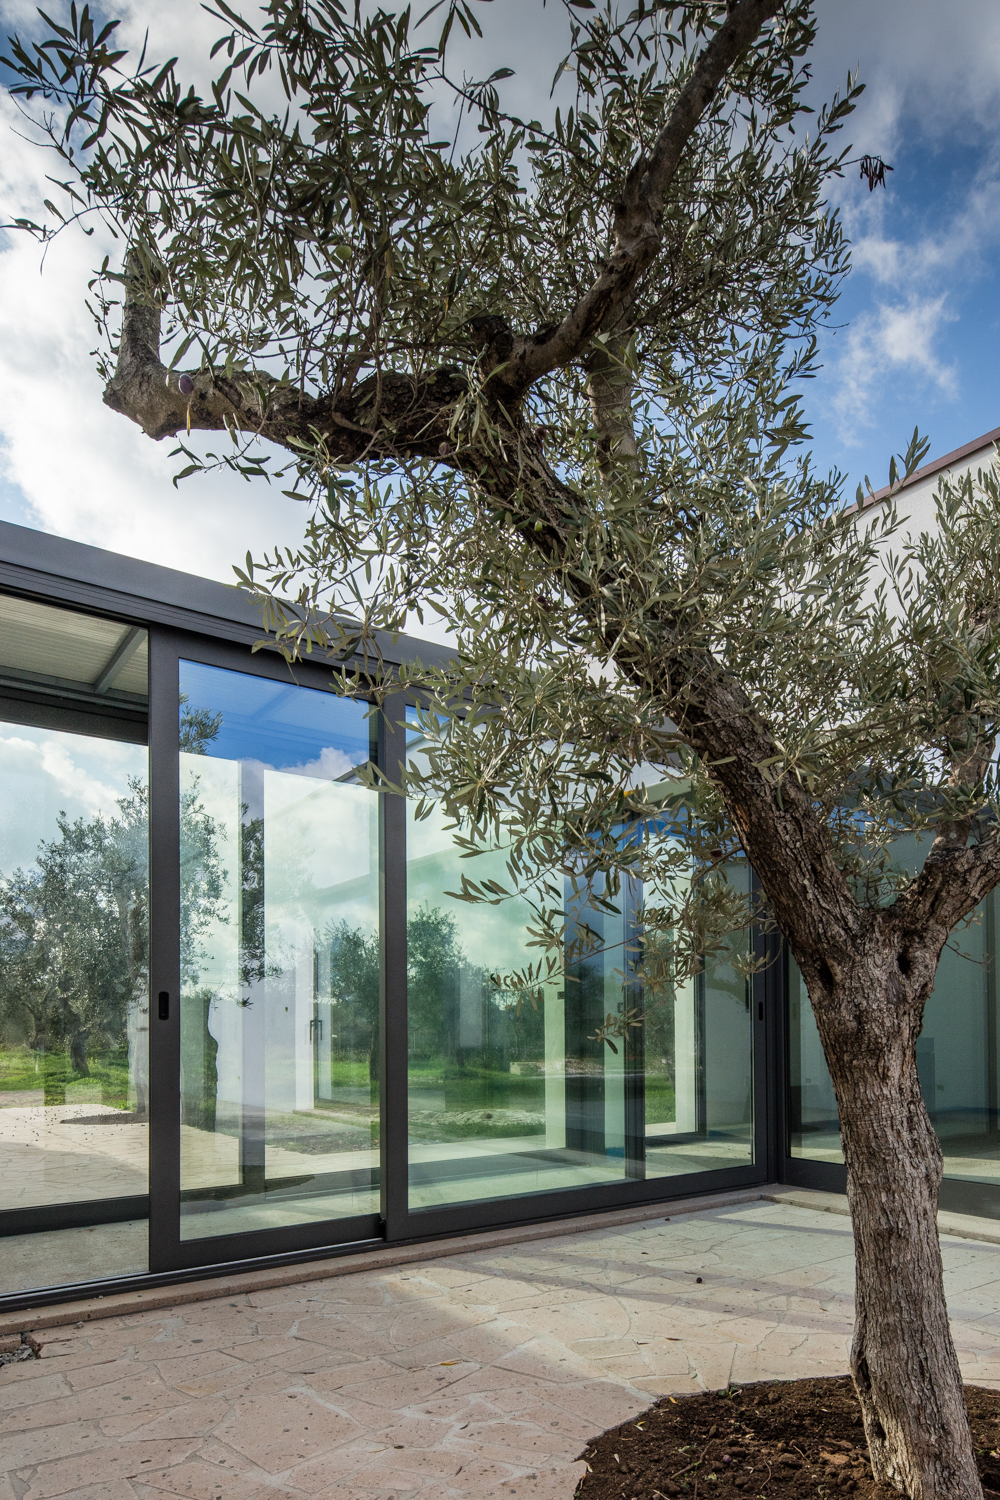 House among olive trees